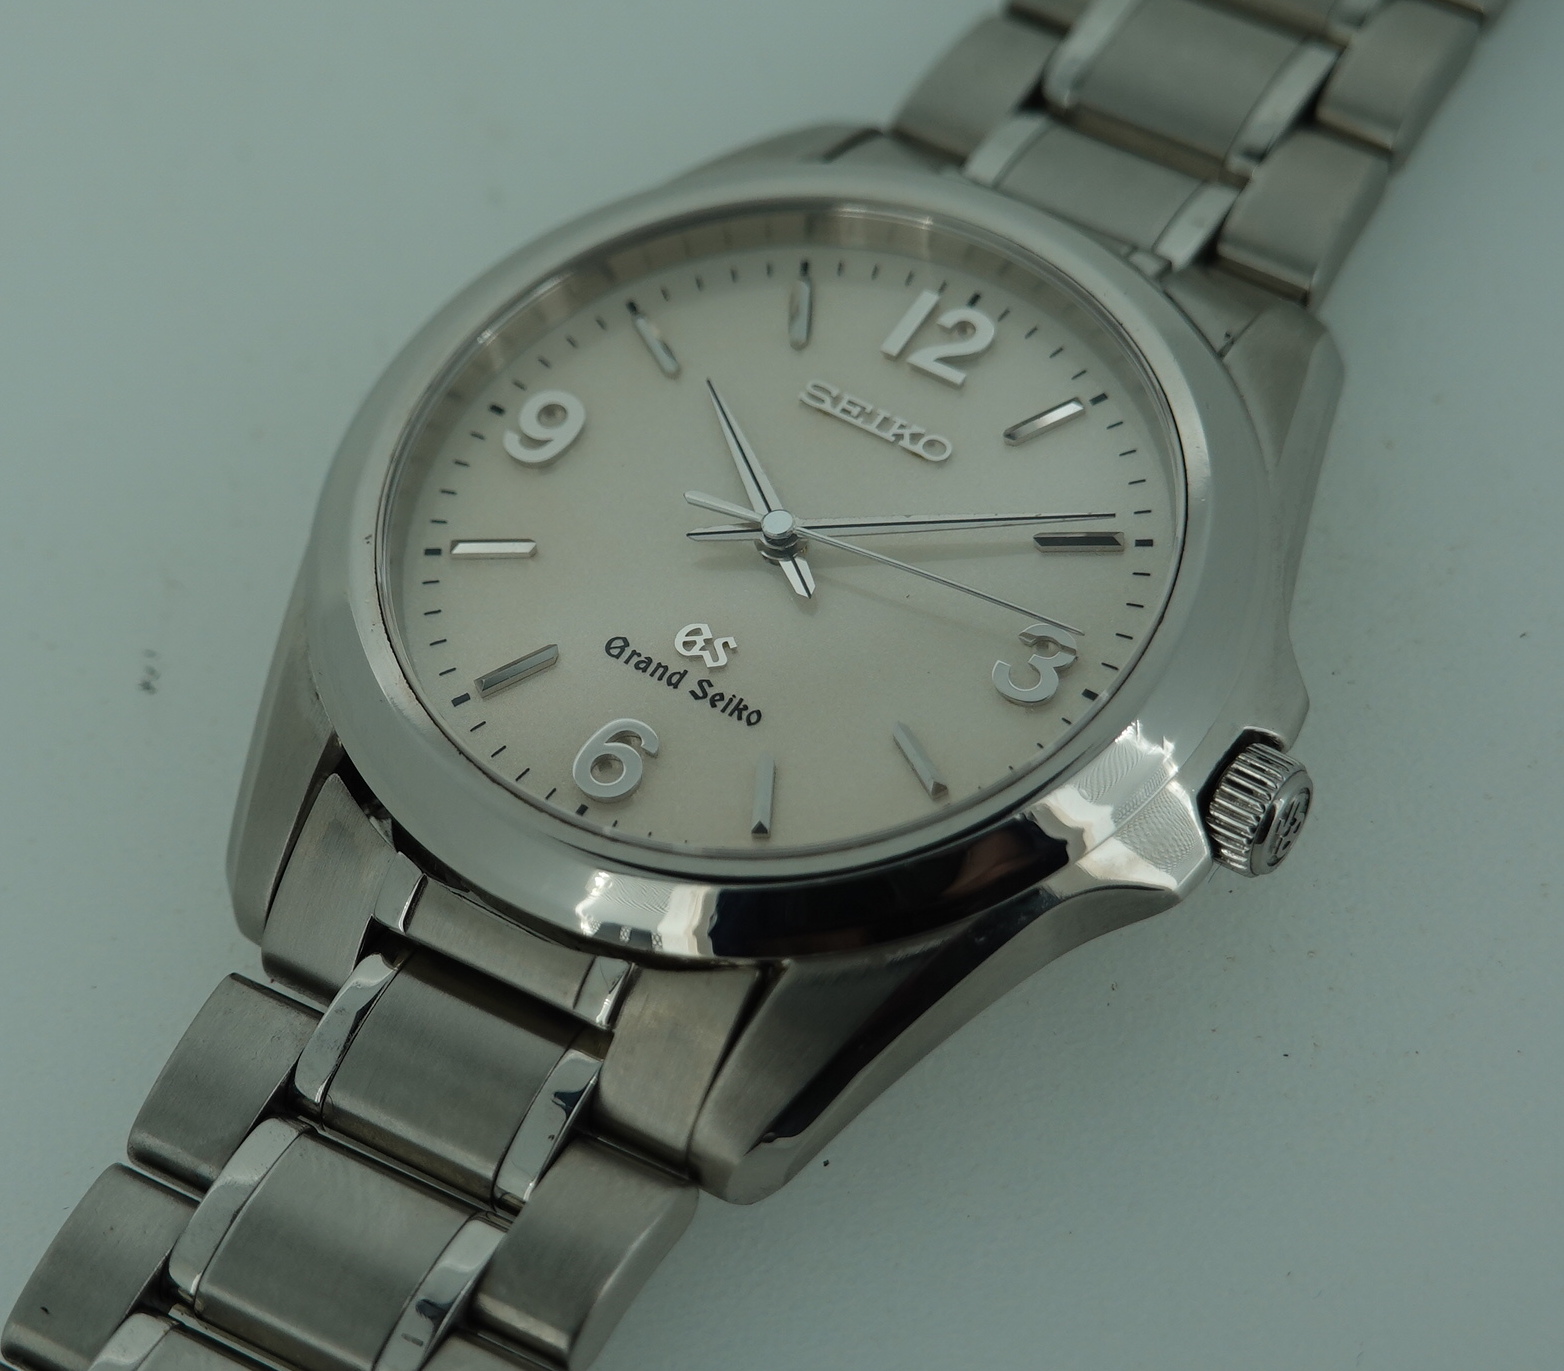 SOLD 2000 Grand Seiko 8J55-0010 - Birth Year Watches